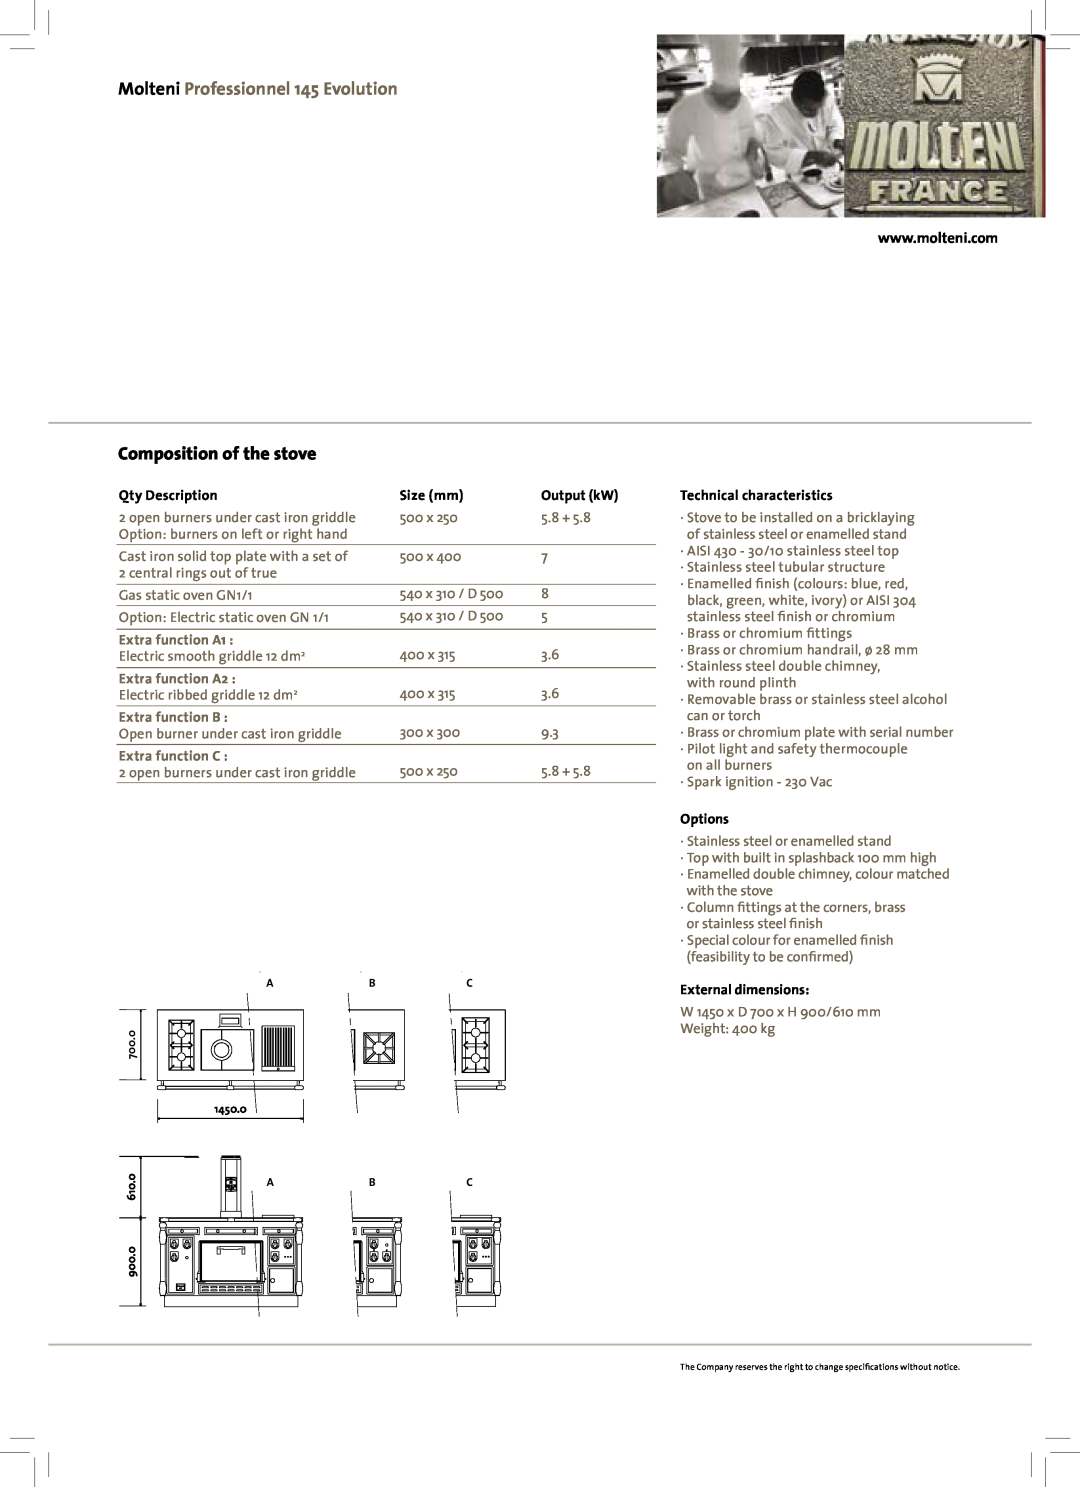 Molteni Molteni Professionnel 145 Evolution, Composition of the stove, Qty Description, Size mm, Extra function A1 